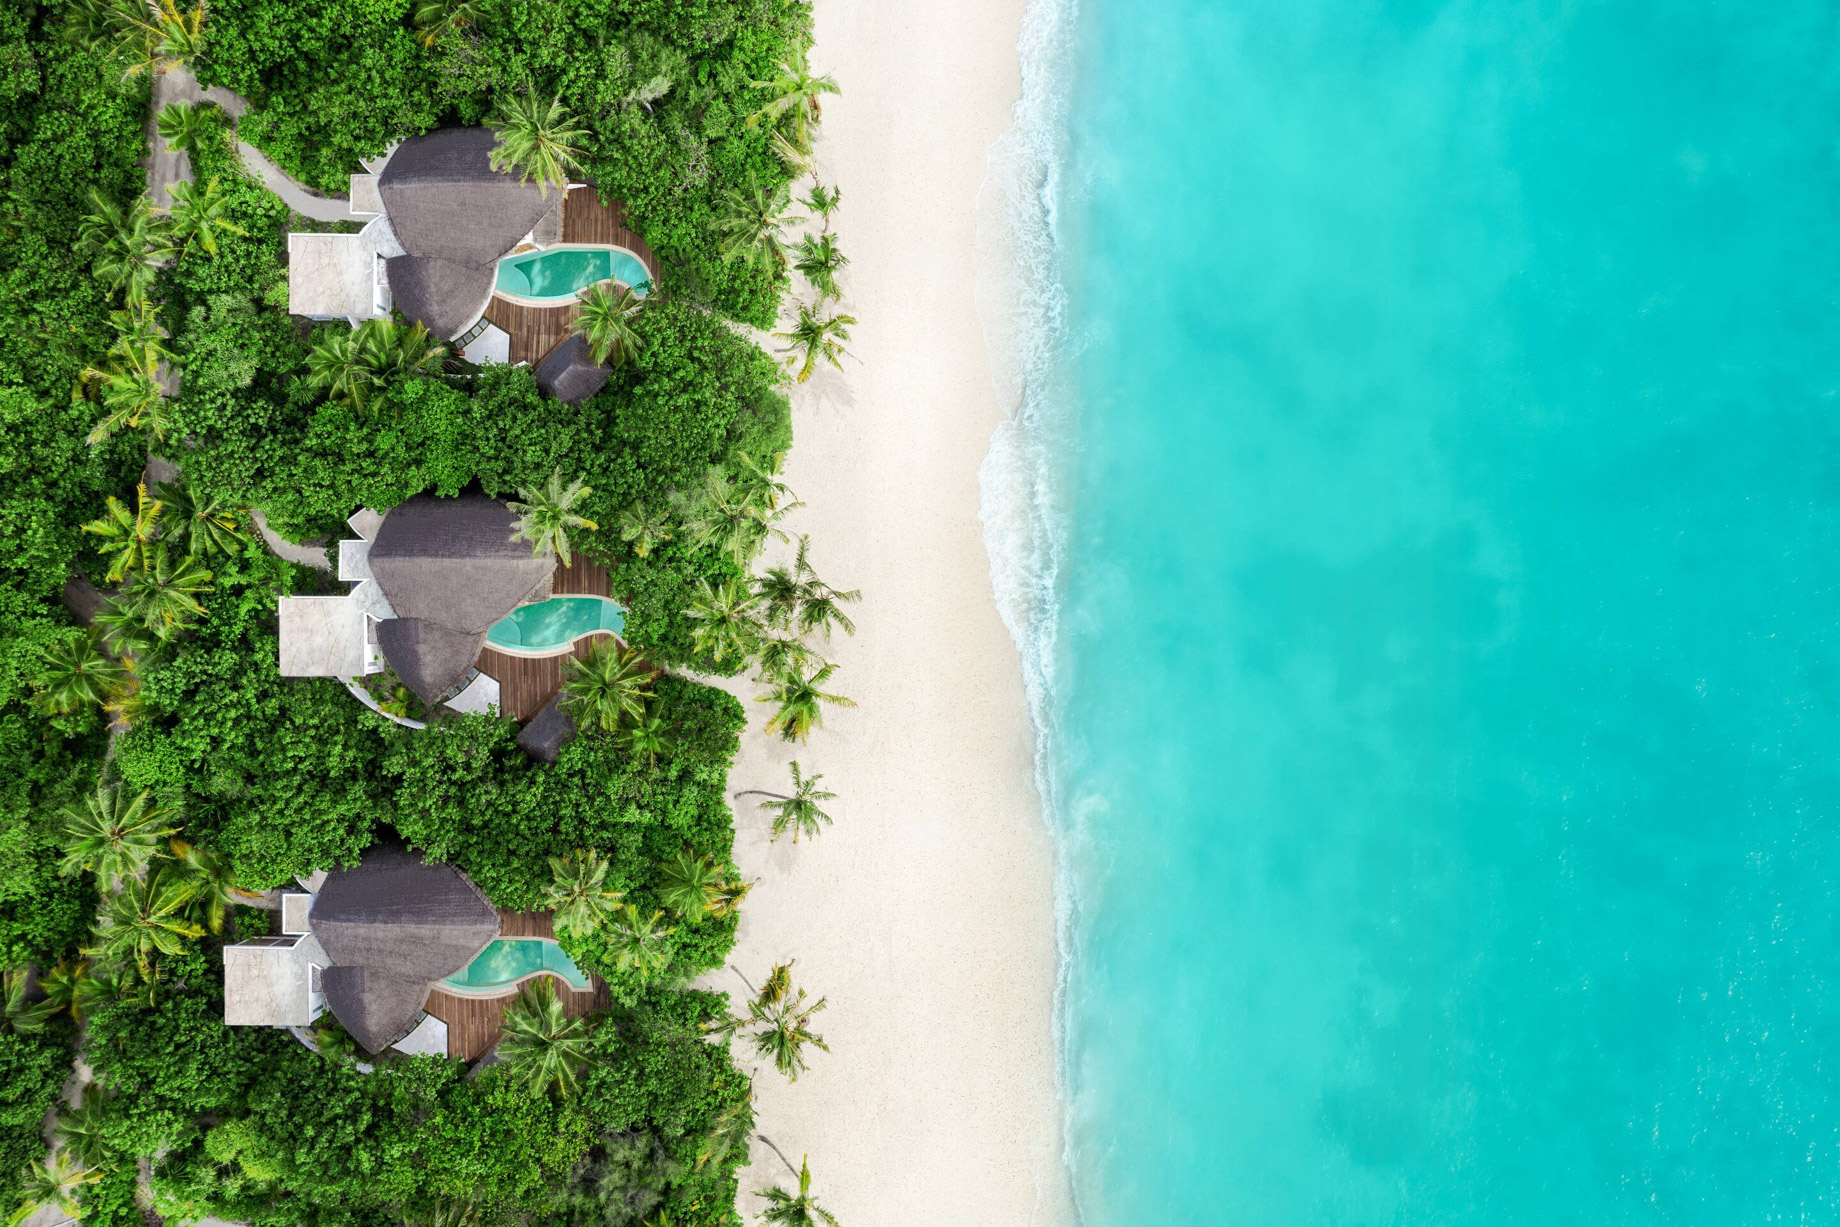 JW Marriott Maldives Resort & Spa – Shaviyani Atoll, Maldives – Duplex Beach Pool Villa Overhead Bird’s Eye View